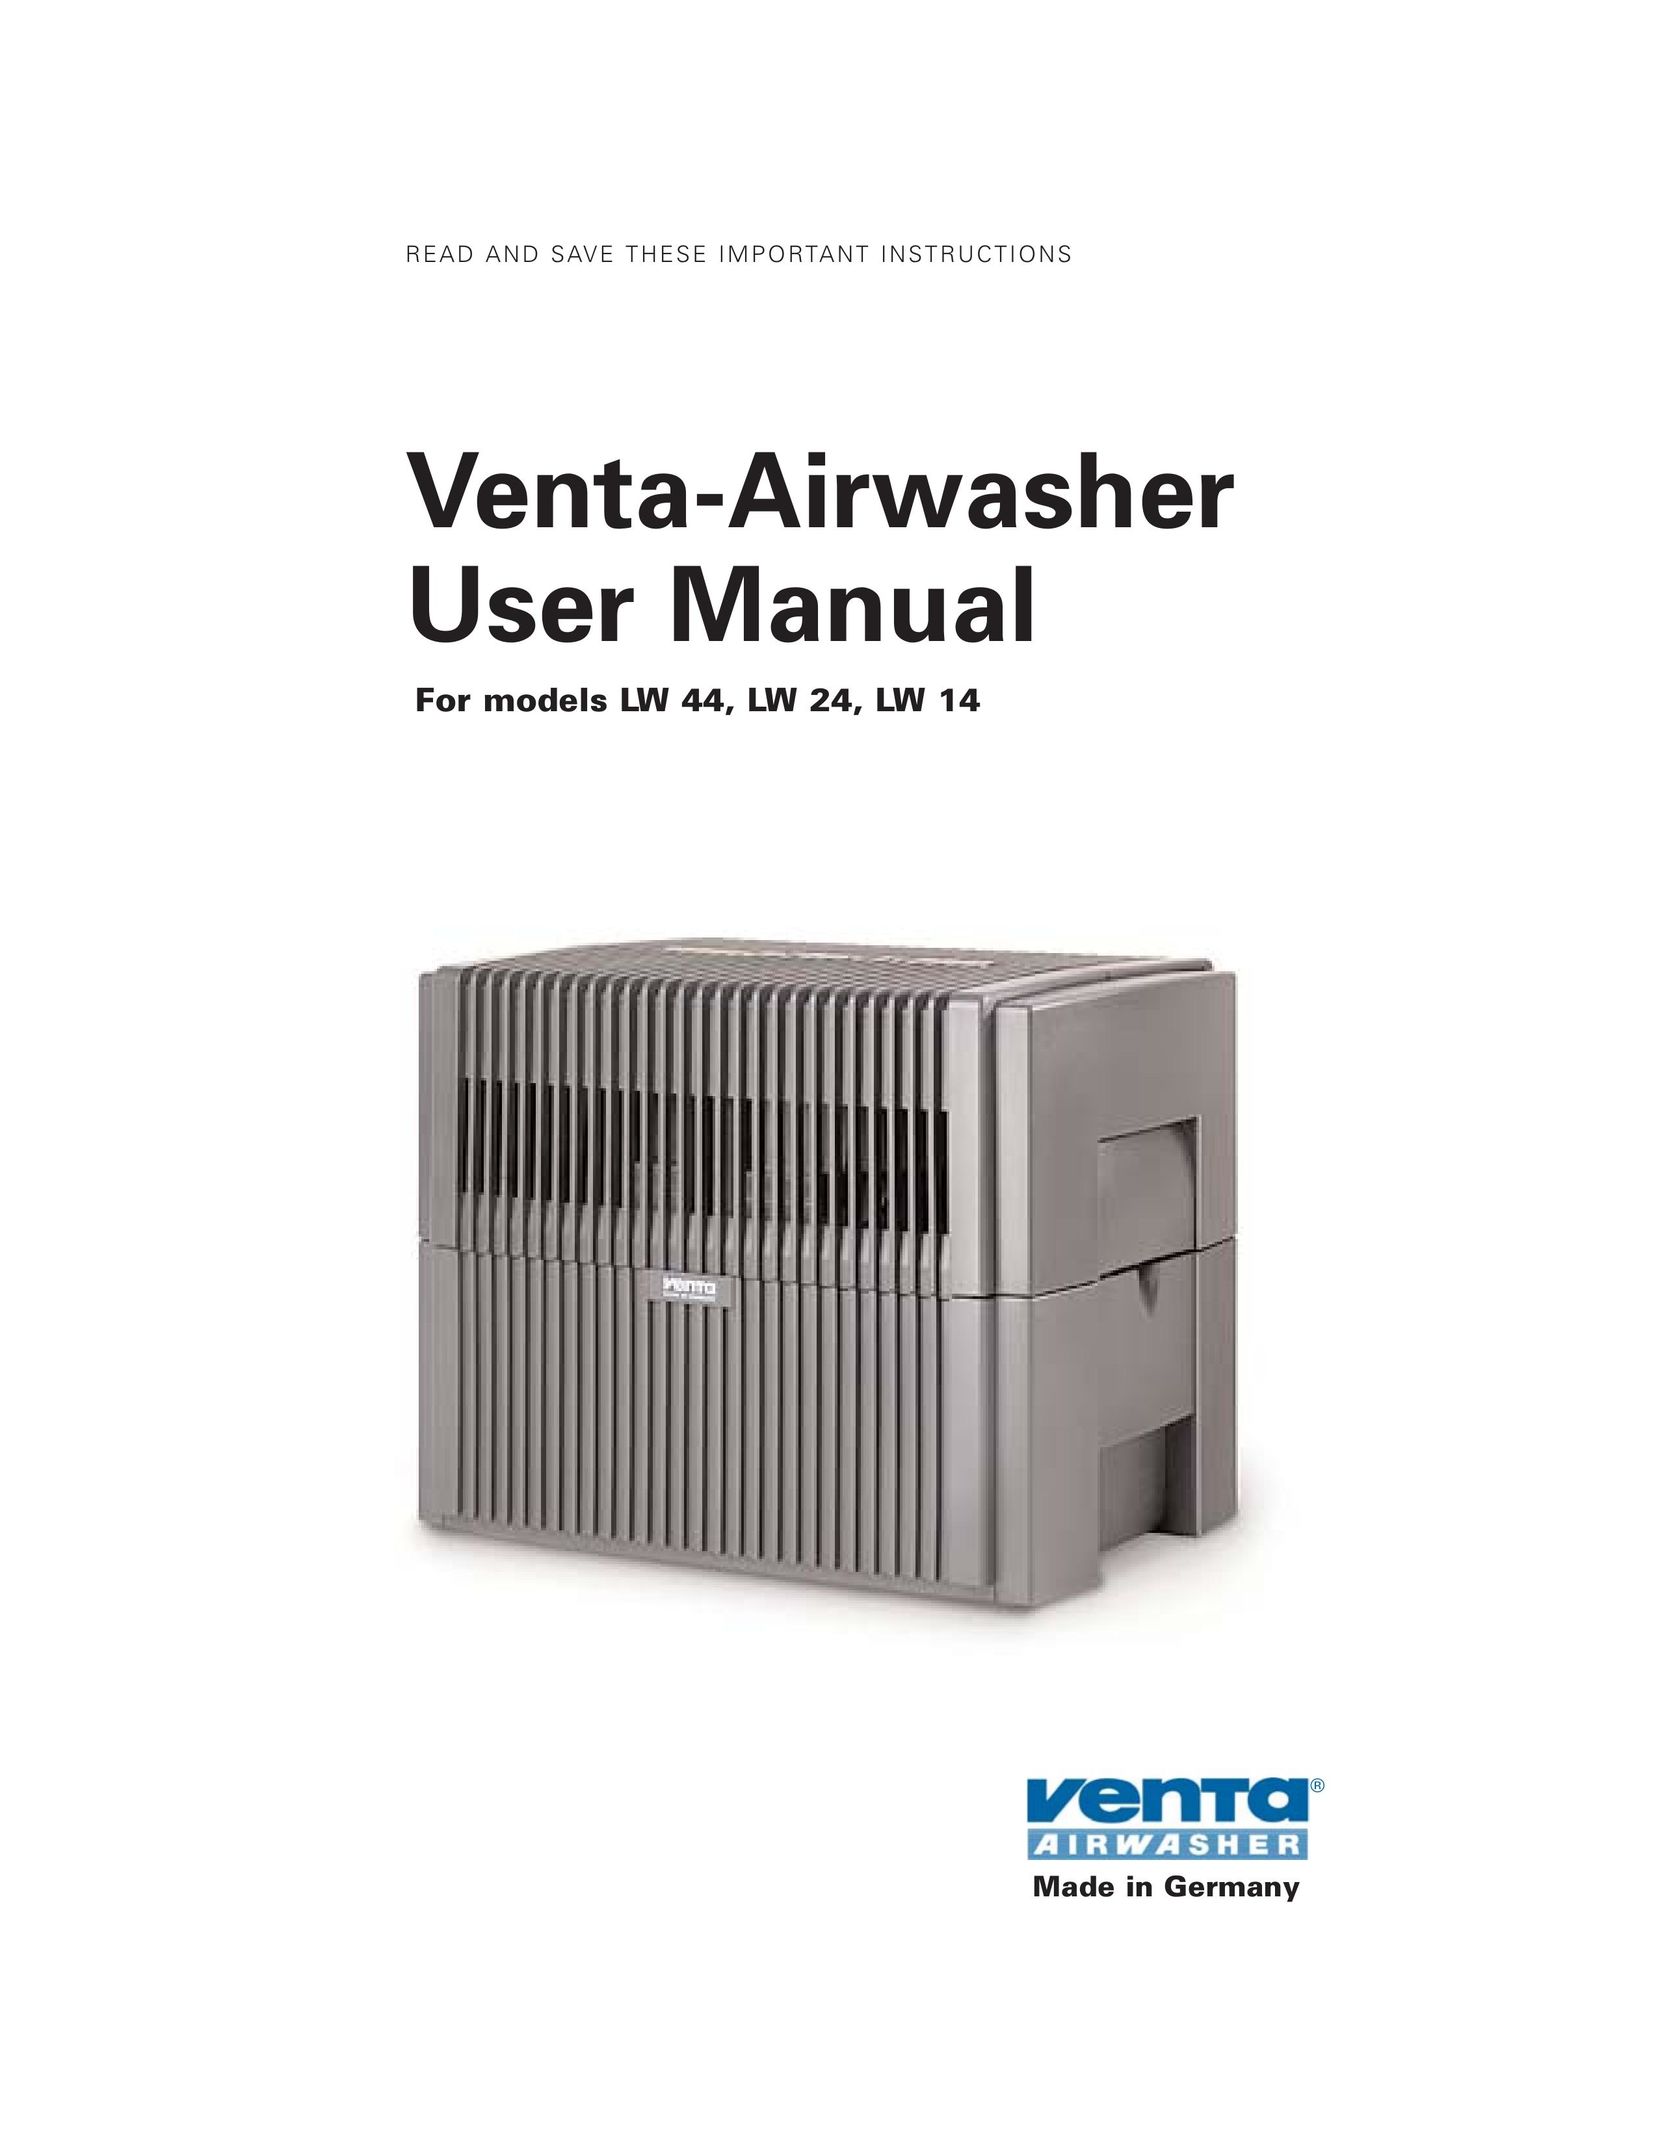 Venta Airwasher LW 24 Humidifier User Manual